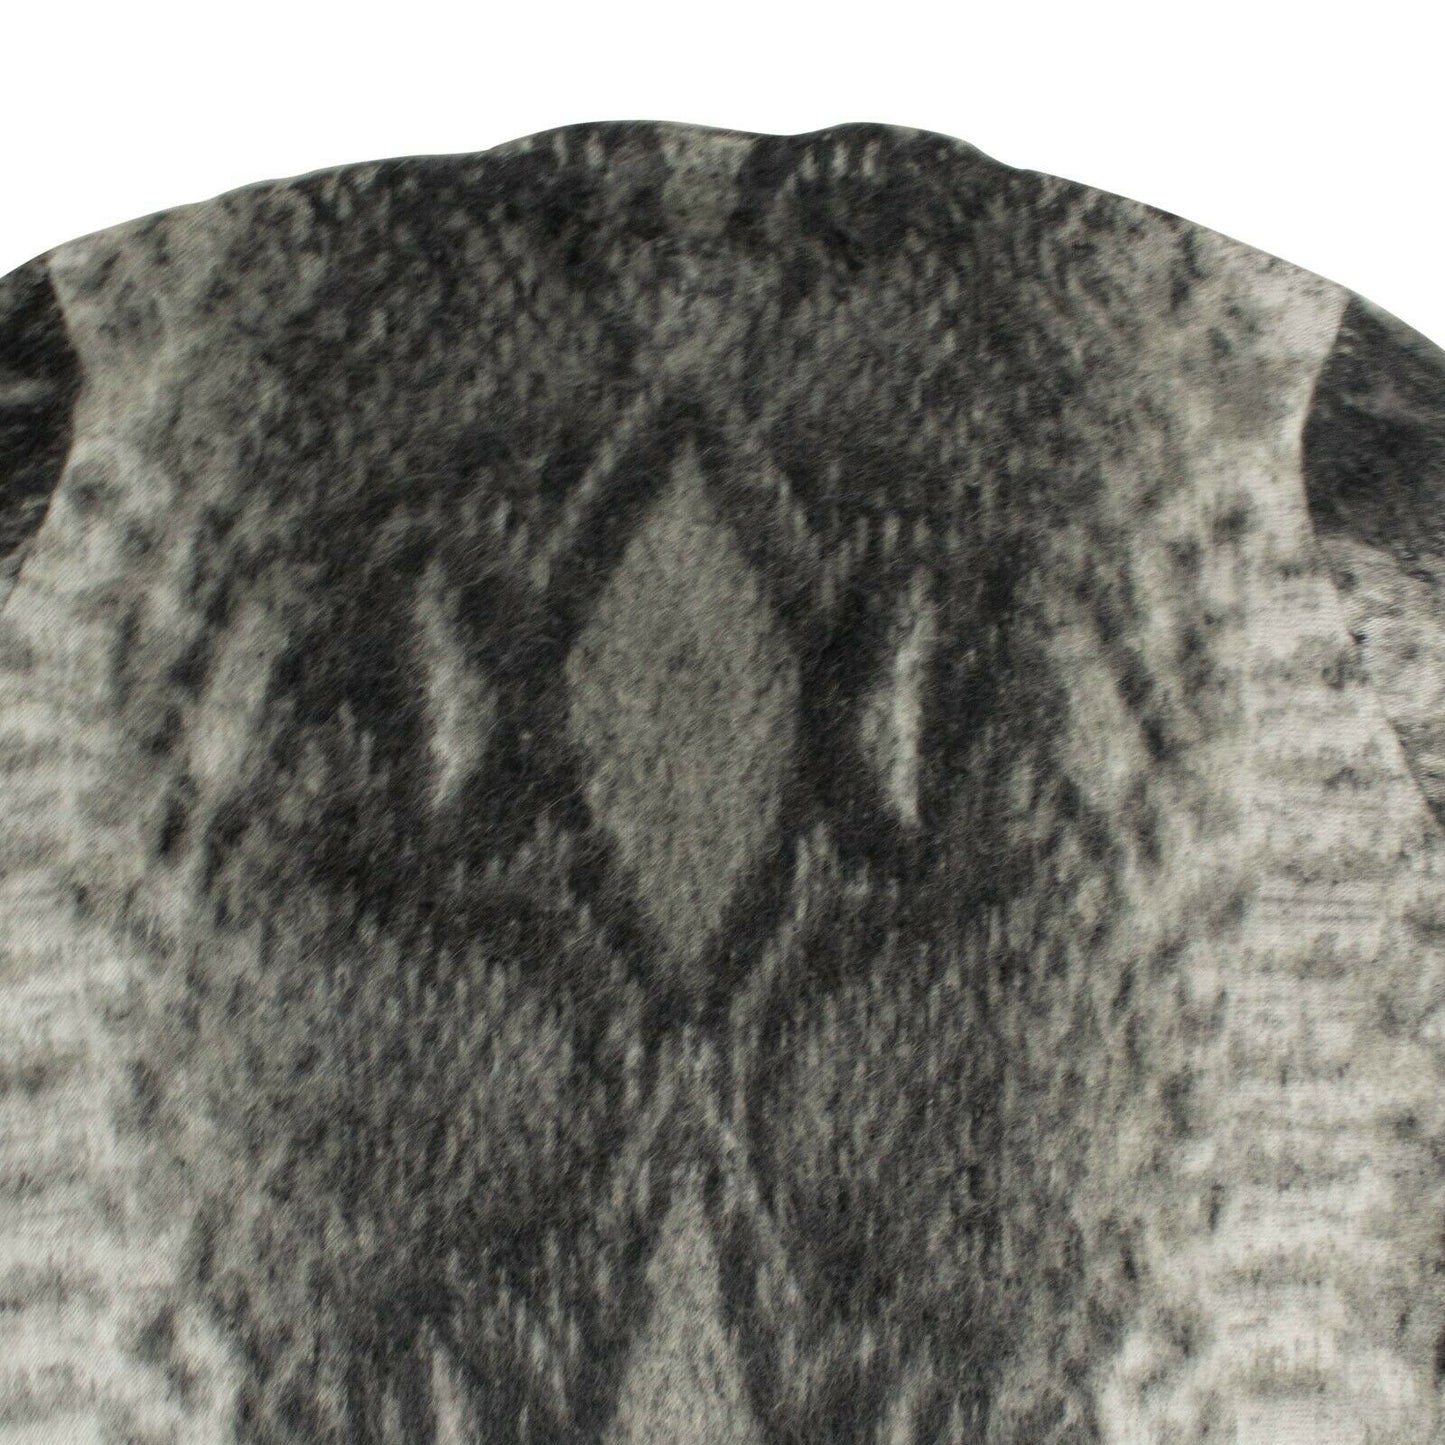 Amiri Oversized Snakeskin Print Cardigan Sweater - Dark Gray